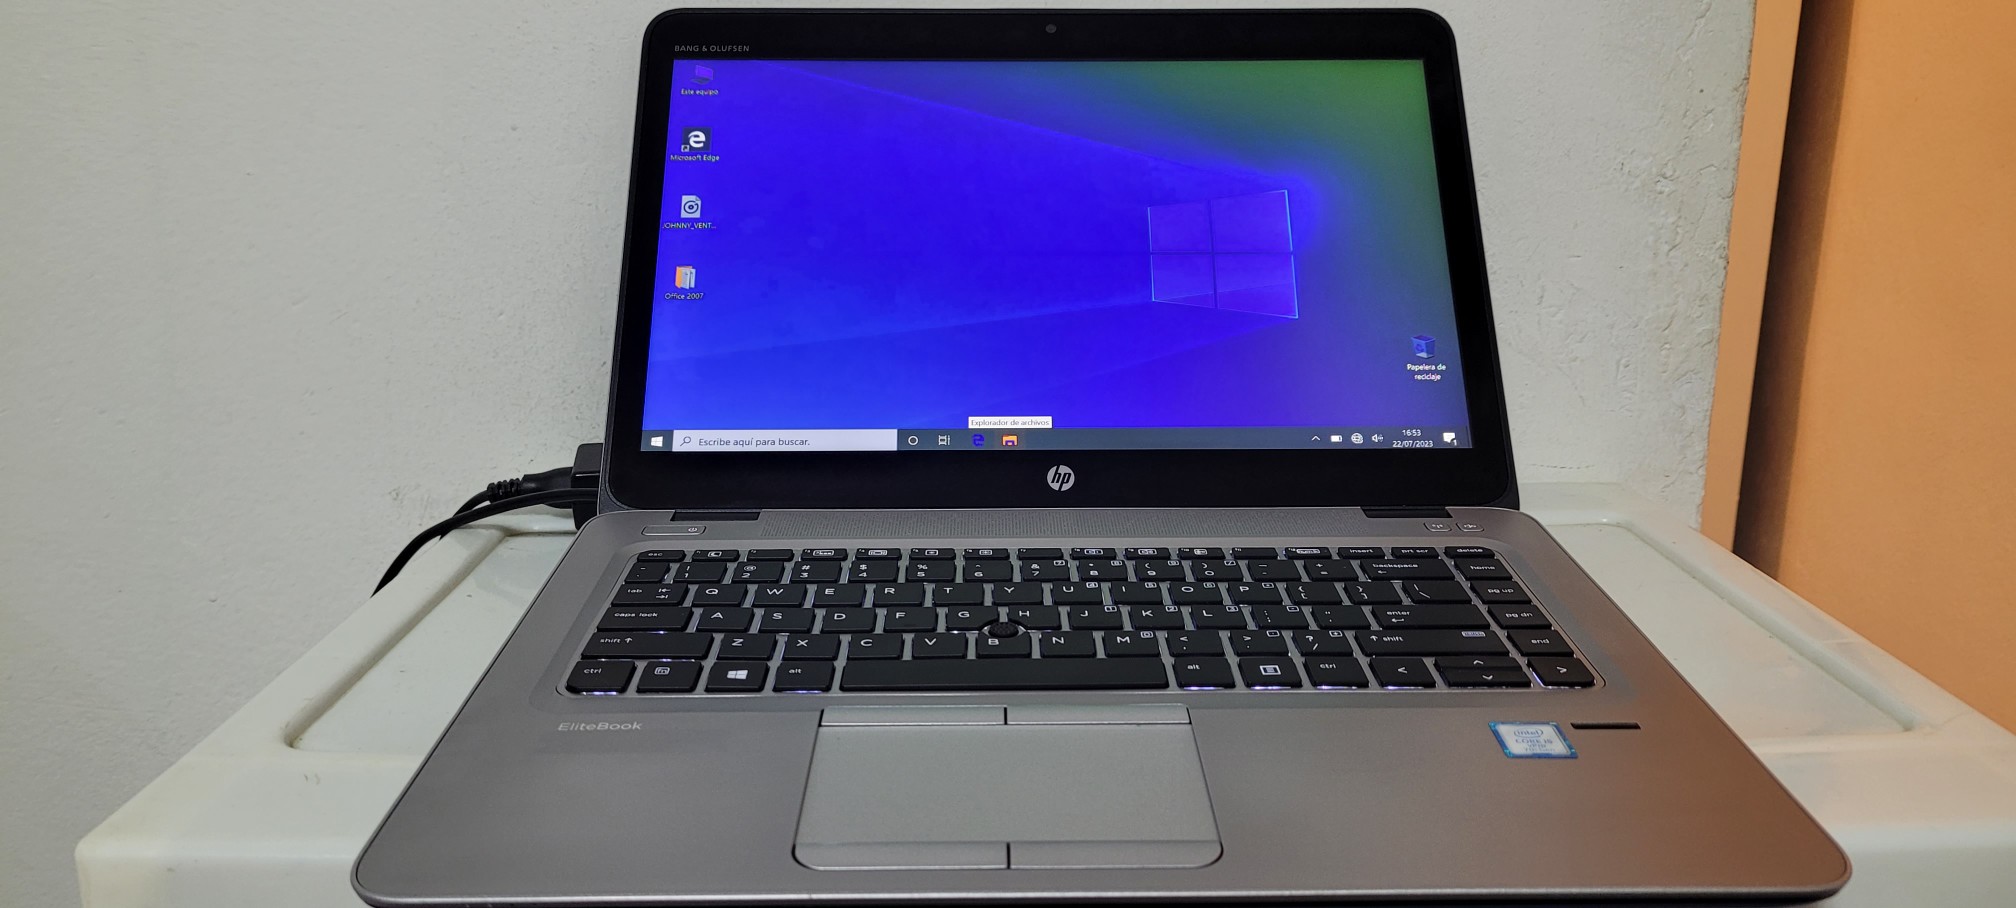 computadoras y laptops - Laptop hp Touch 14 Pulg Core i5 7ma Gen Ram 8gb ddr4 Disco 500gb